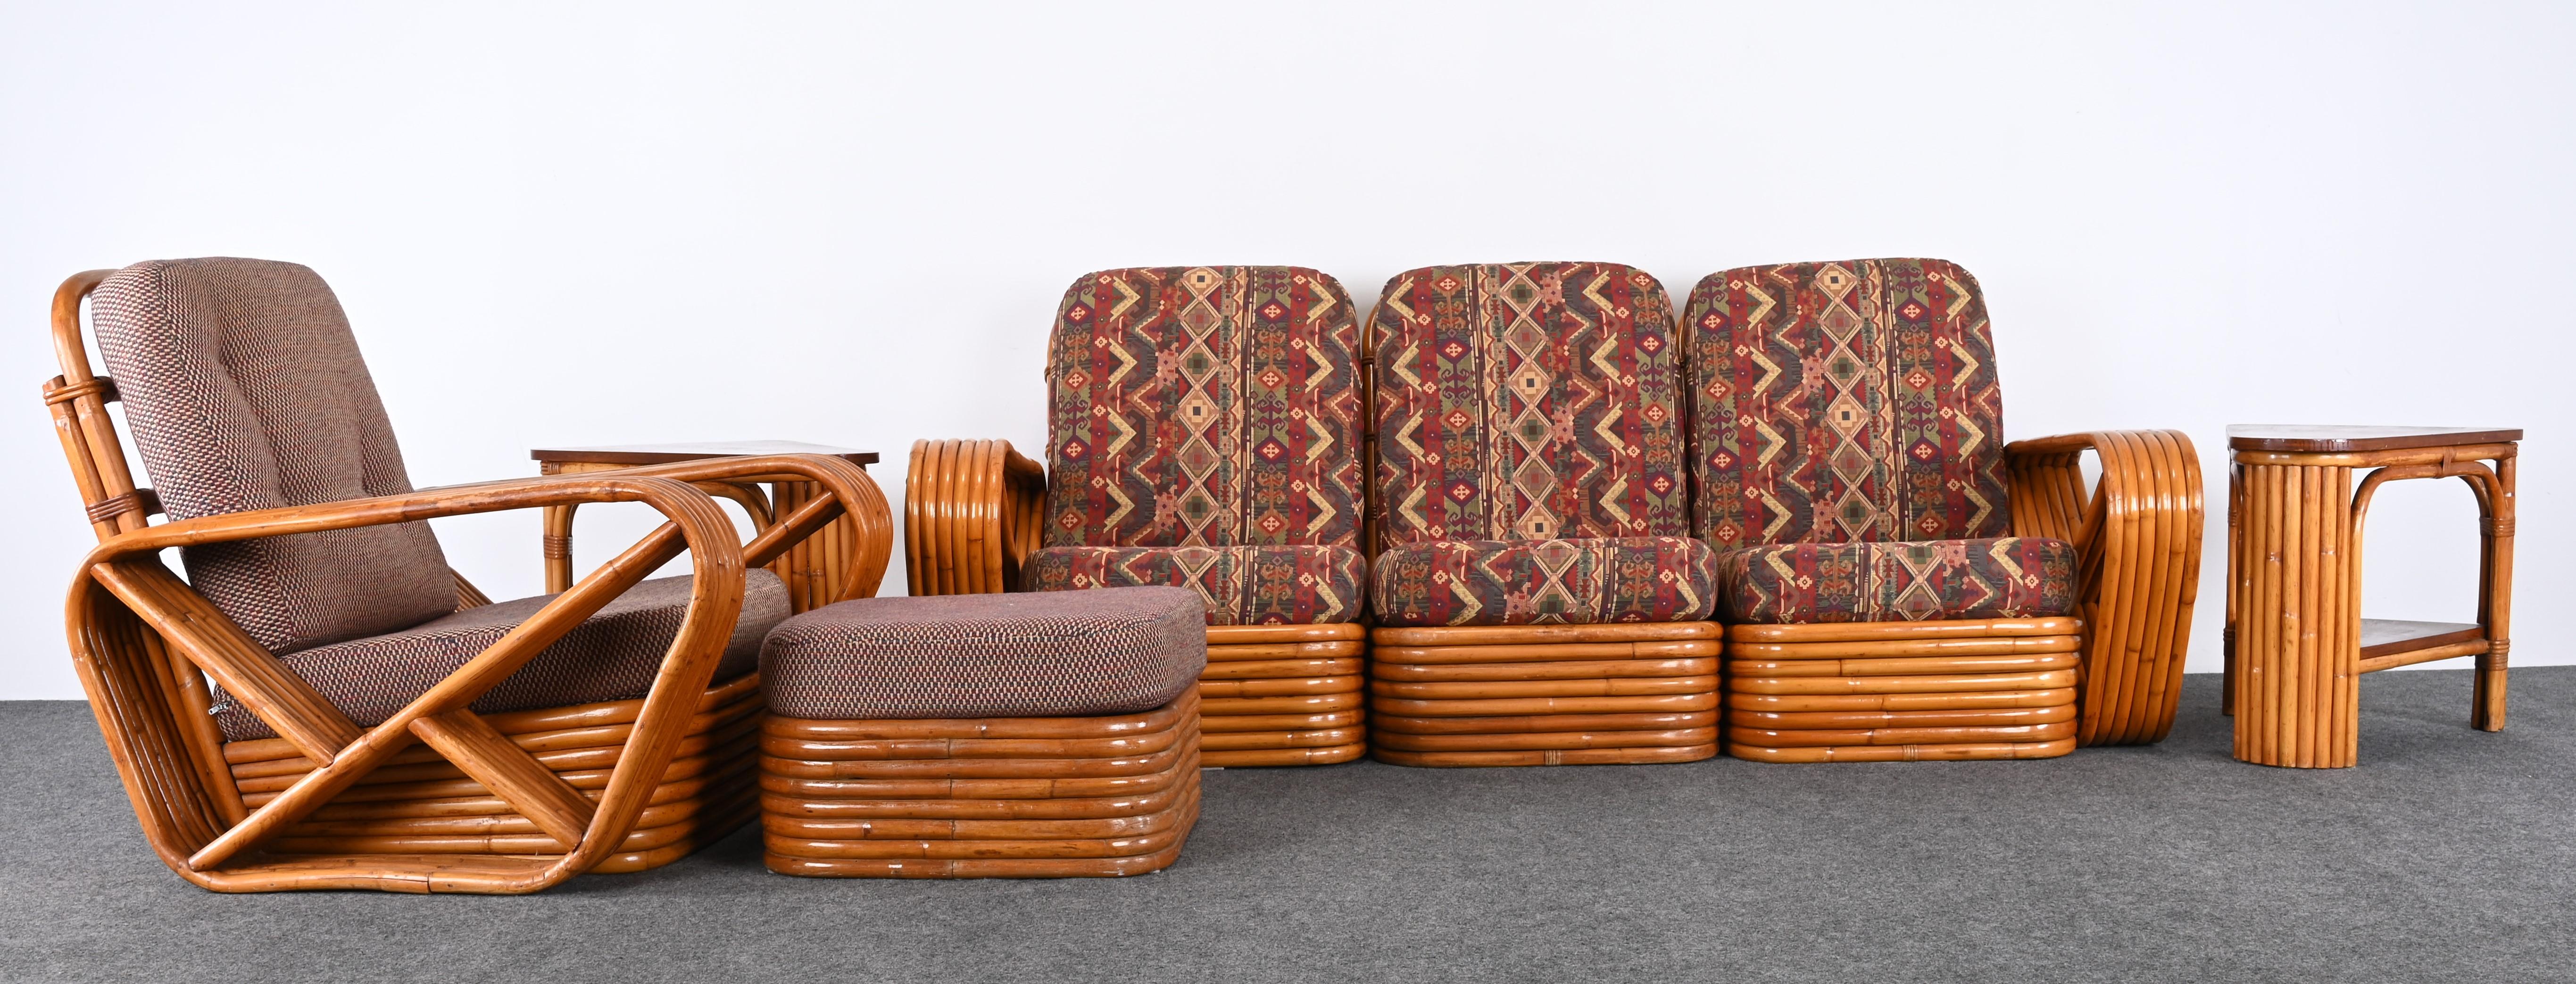 1940s rattan furniture